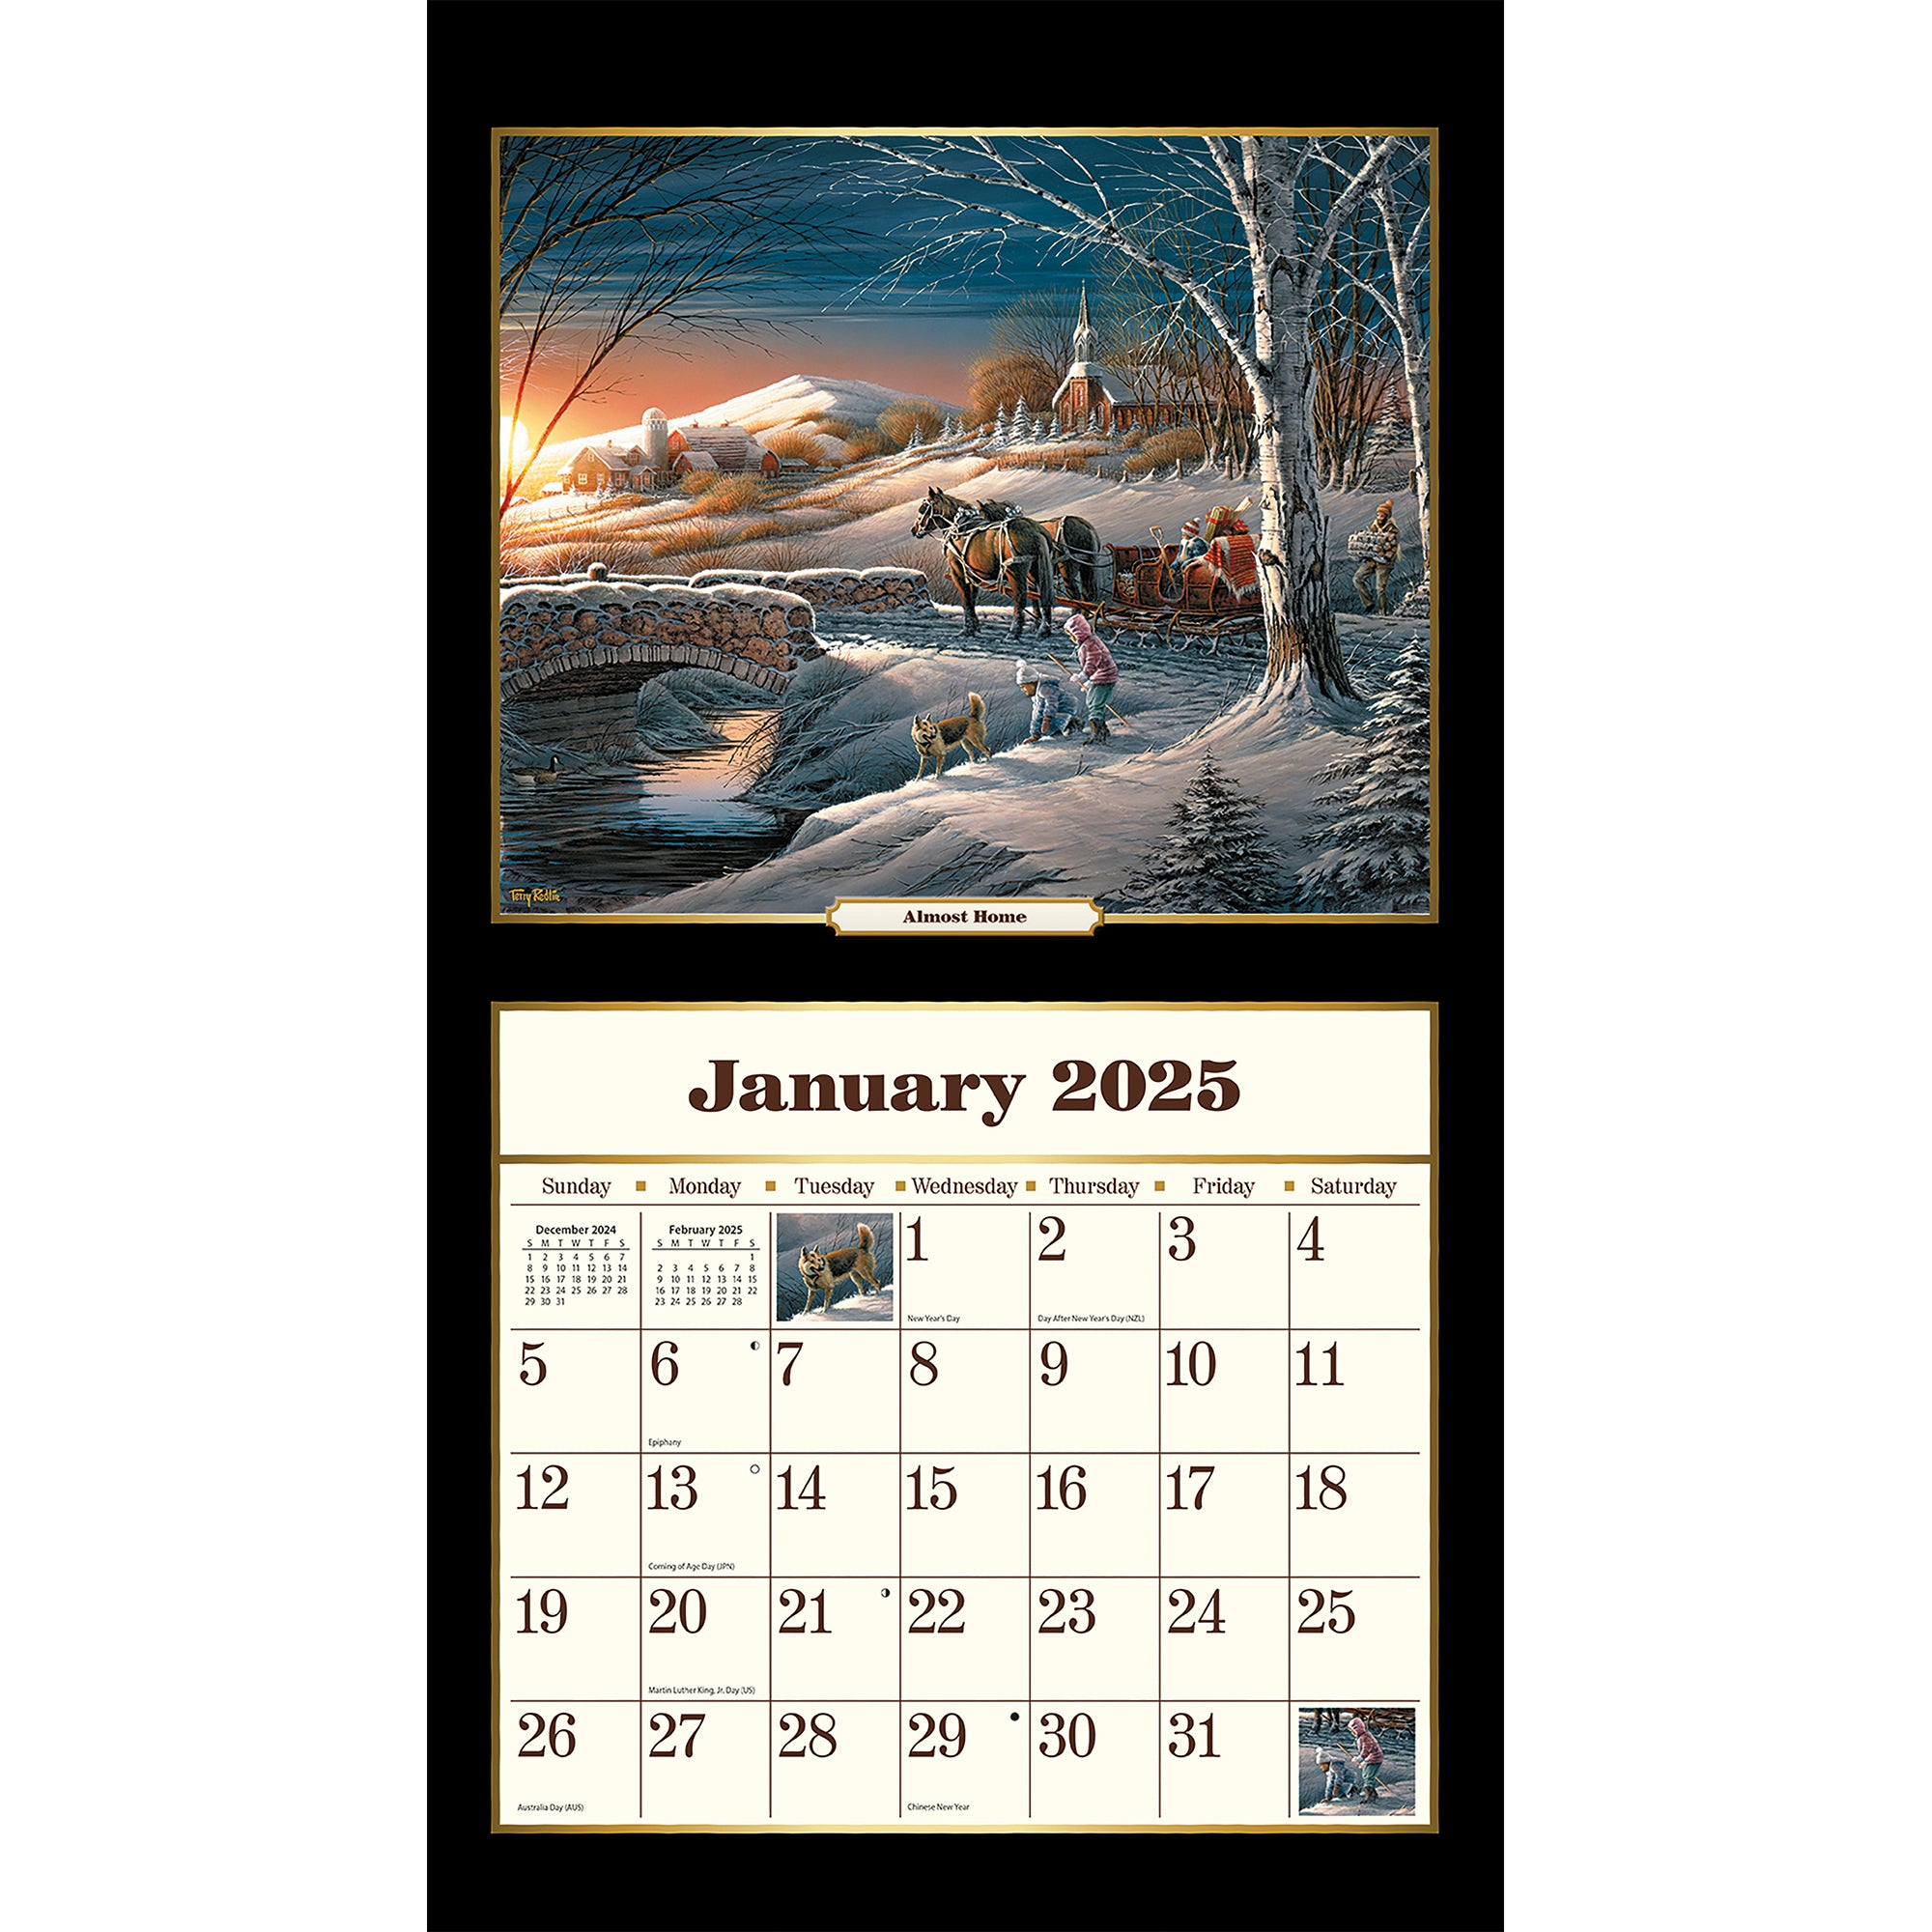 2025 Terry Redlin - LANG Deluxe Wall Calendar